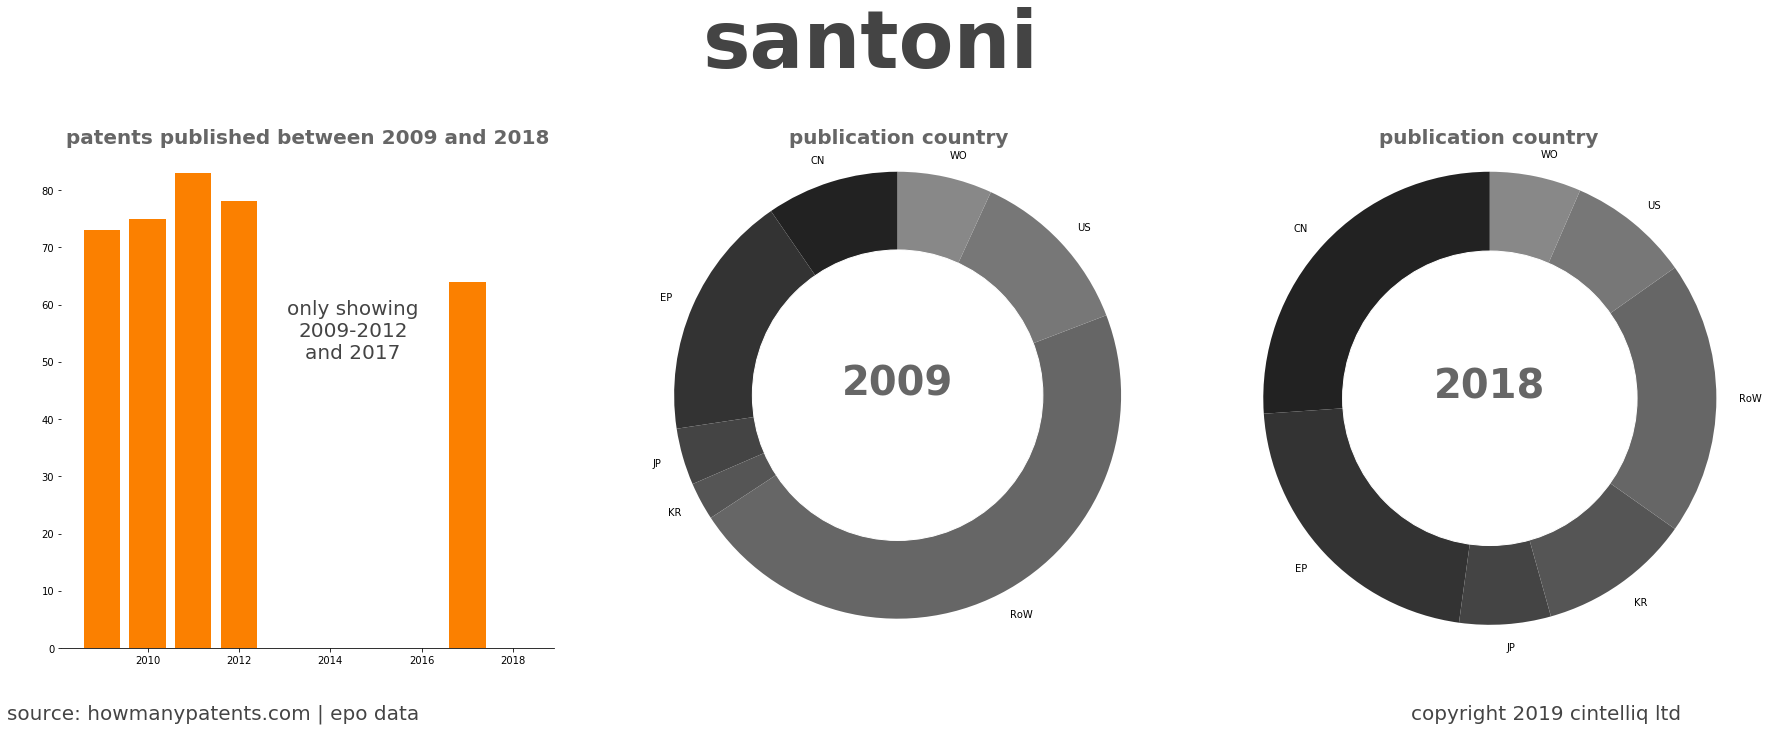 summary of patents for Santoni